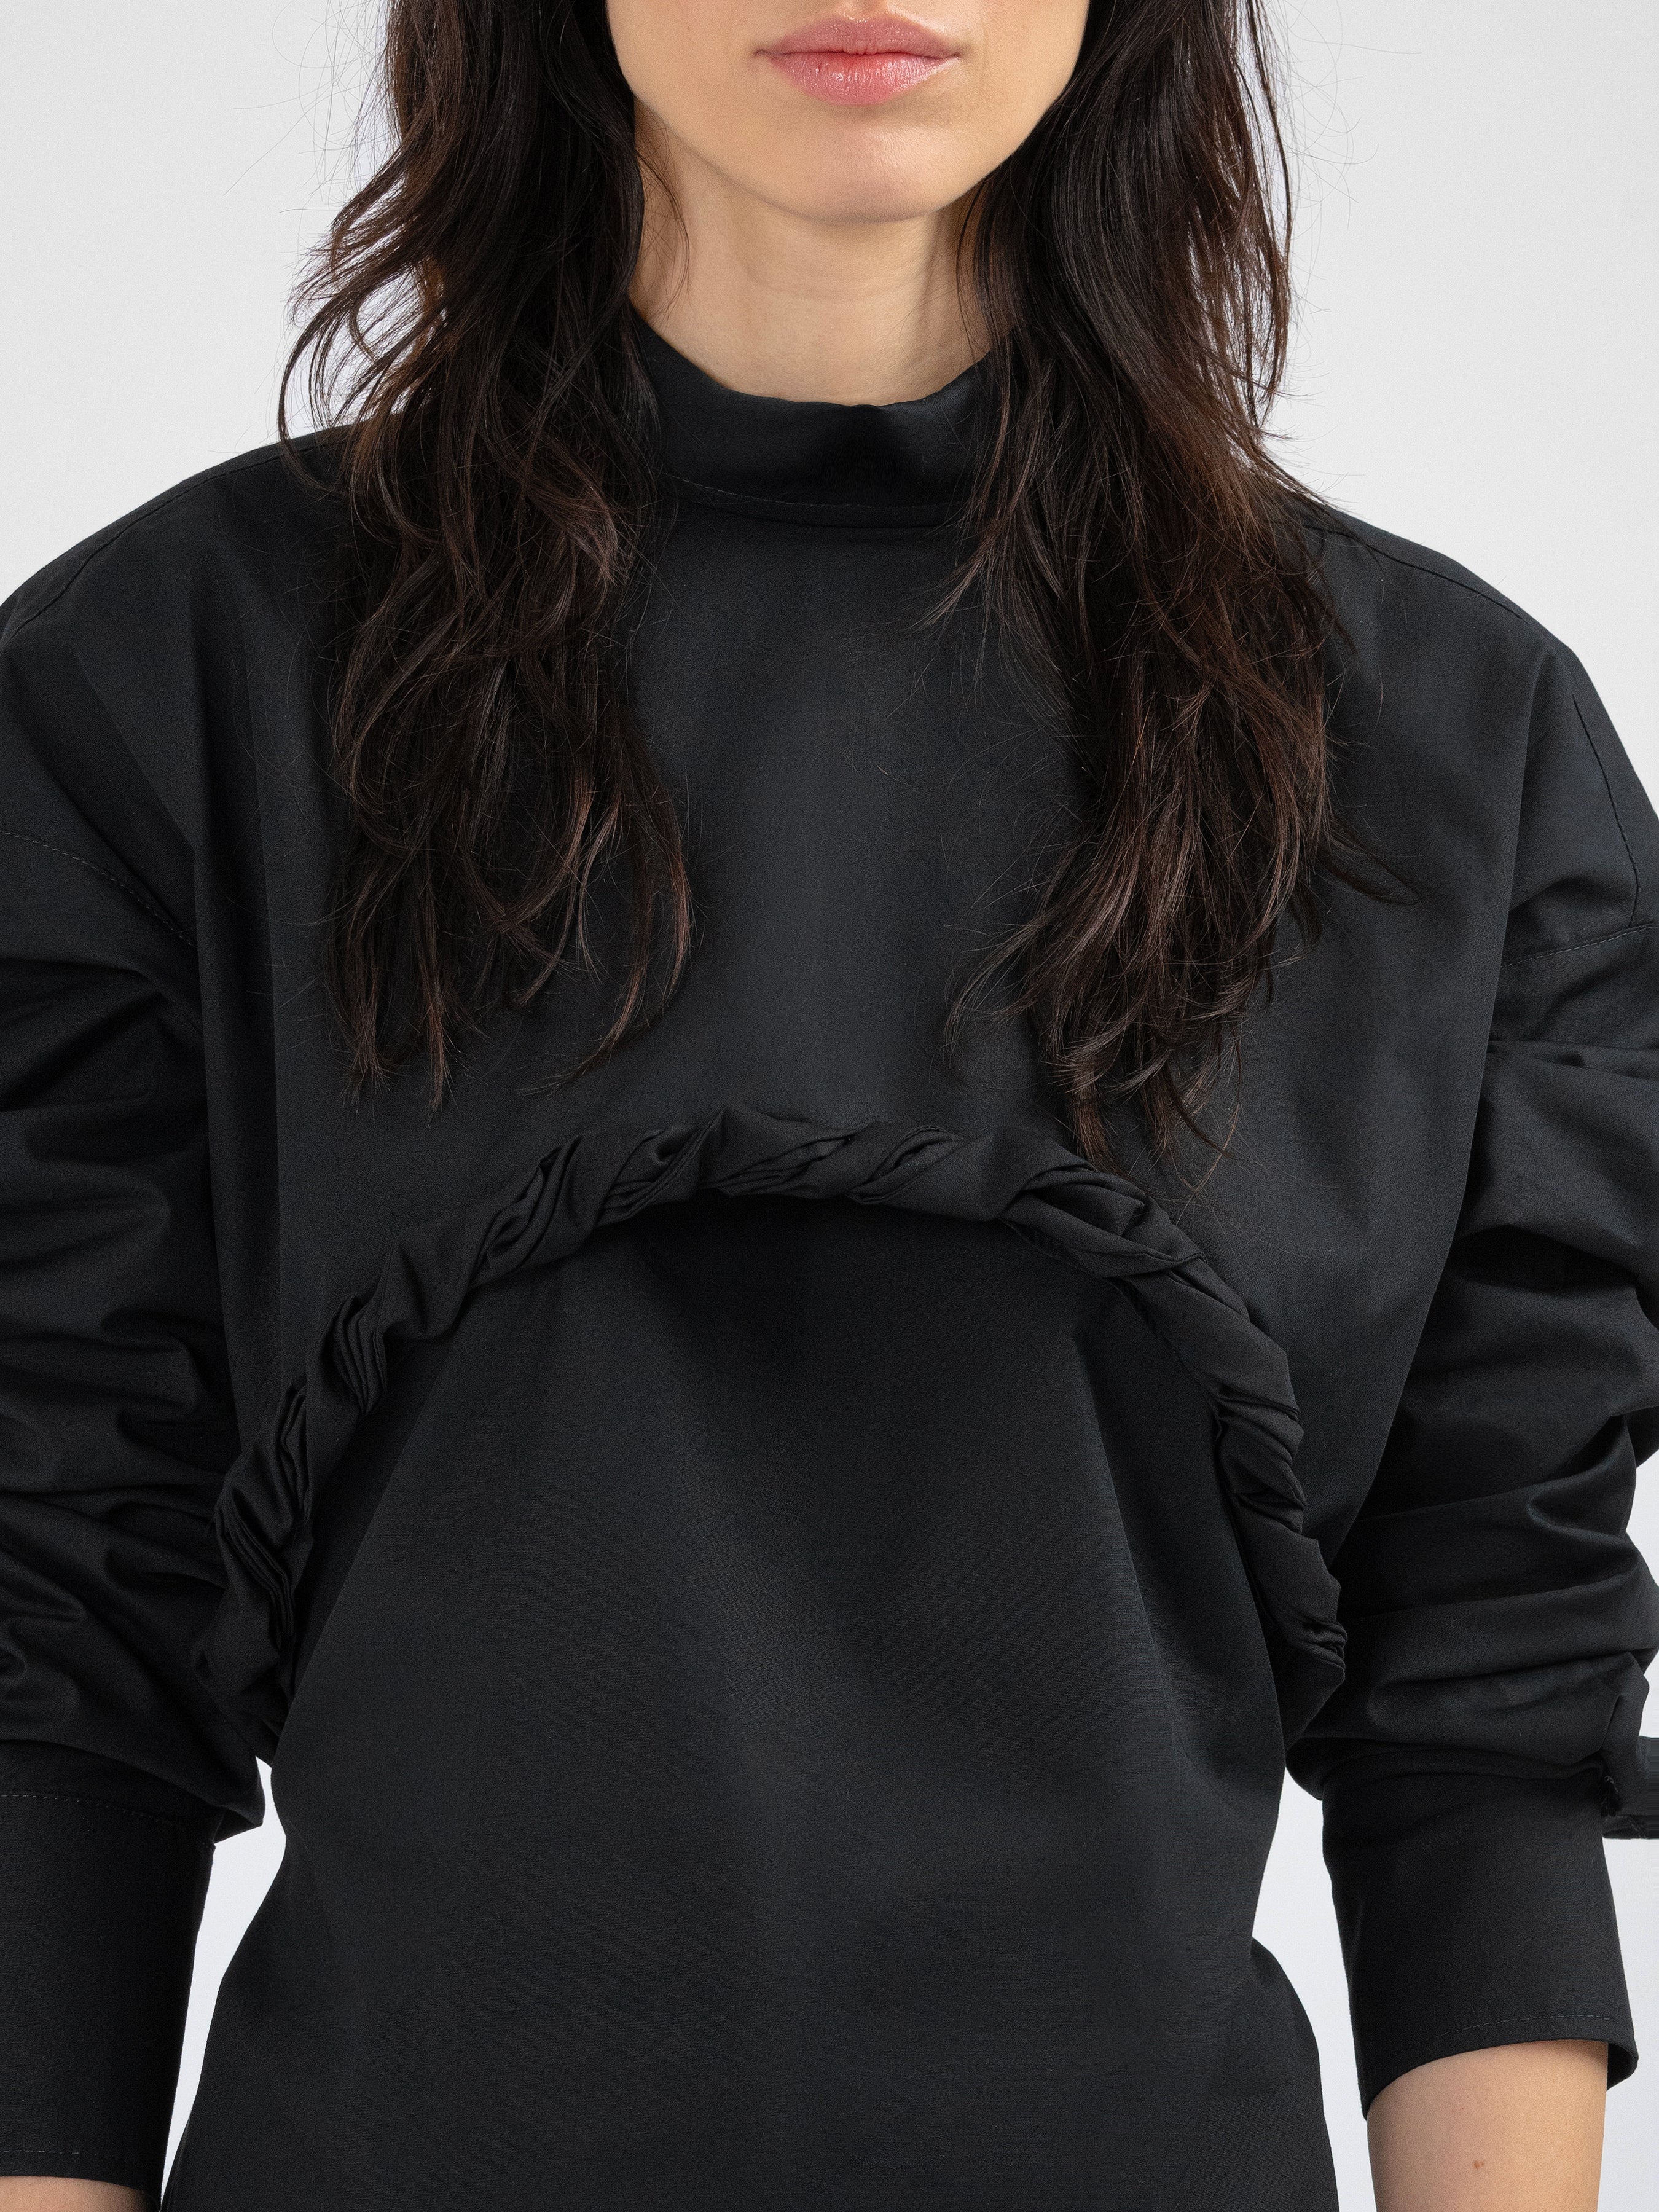 Shop Divalo Kleinrumes Black Tied Cotton Shirt